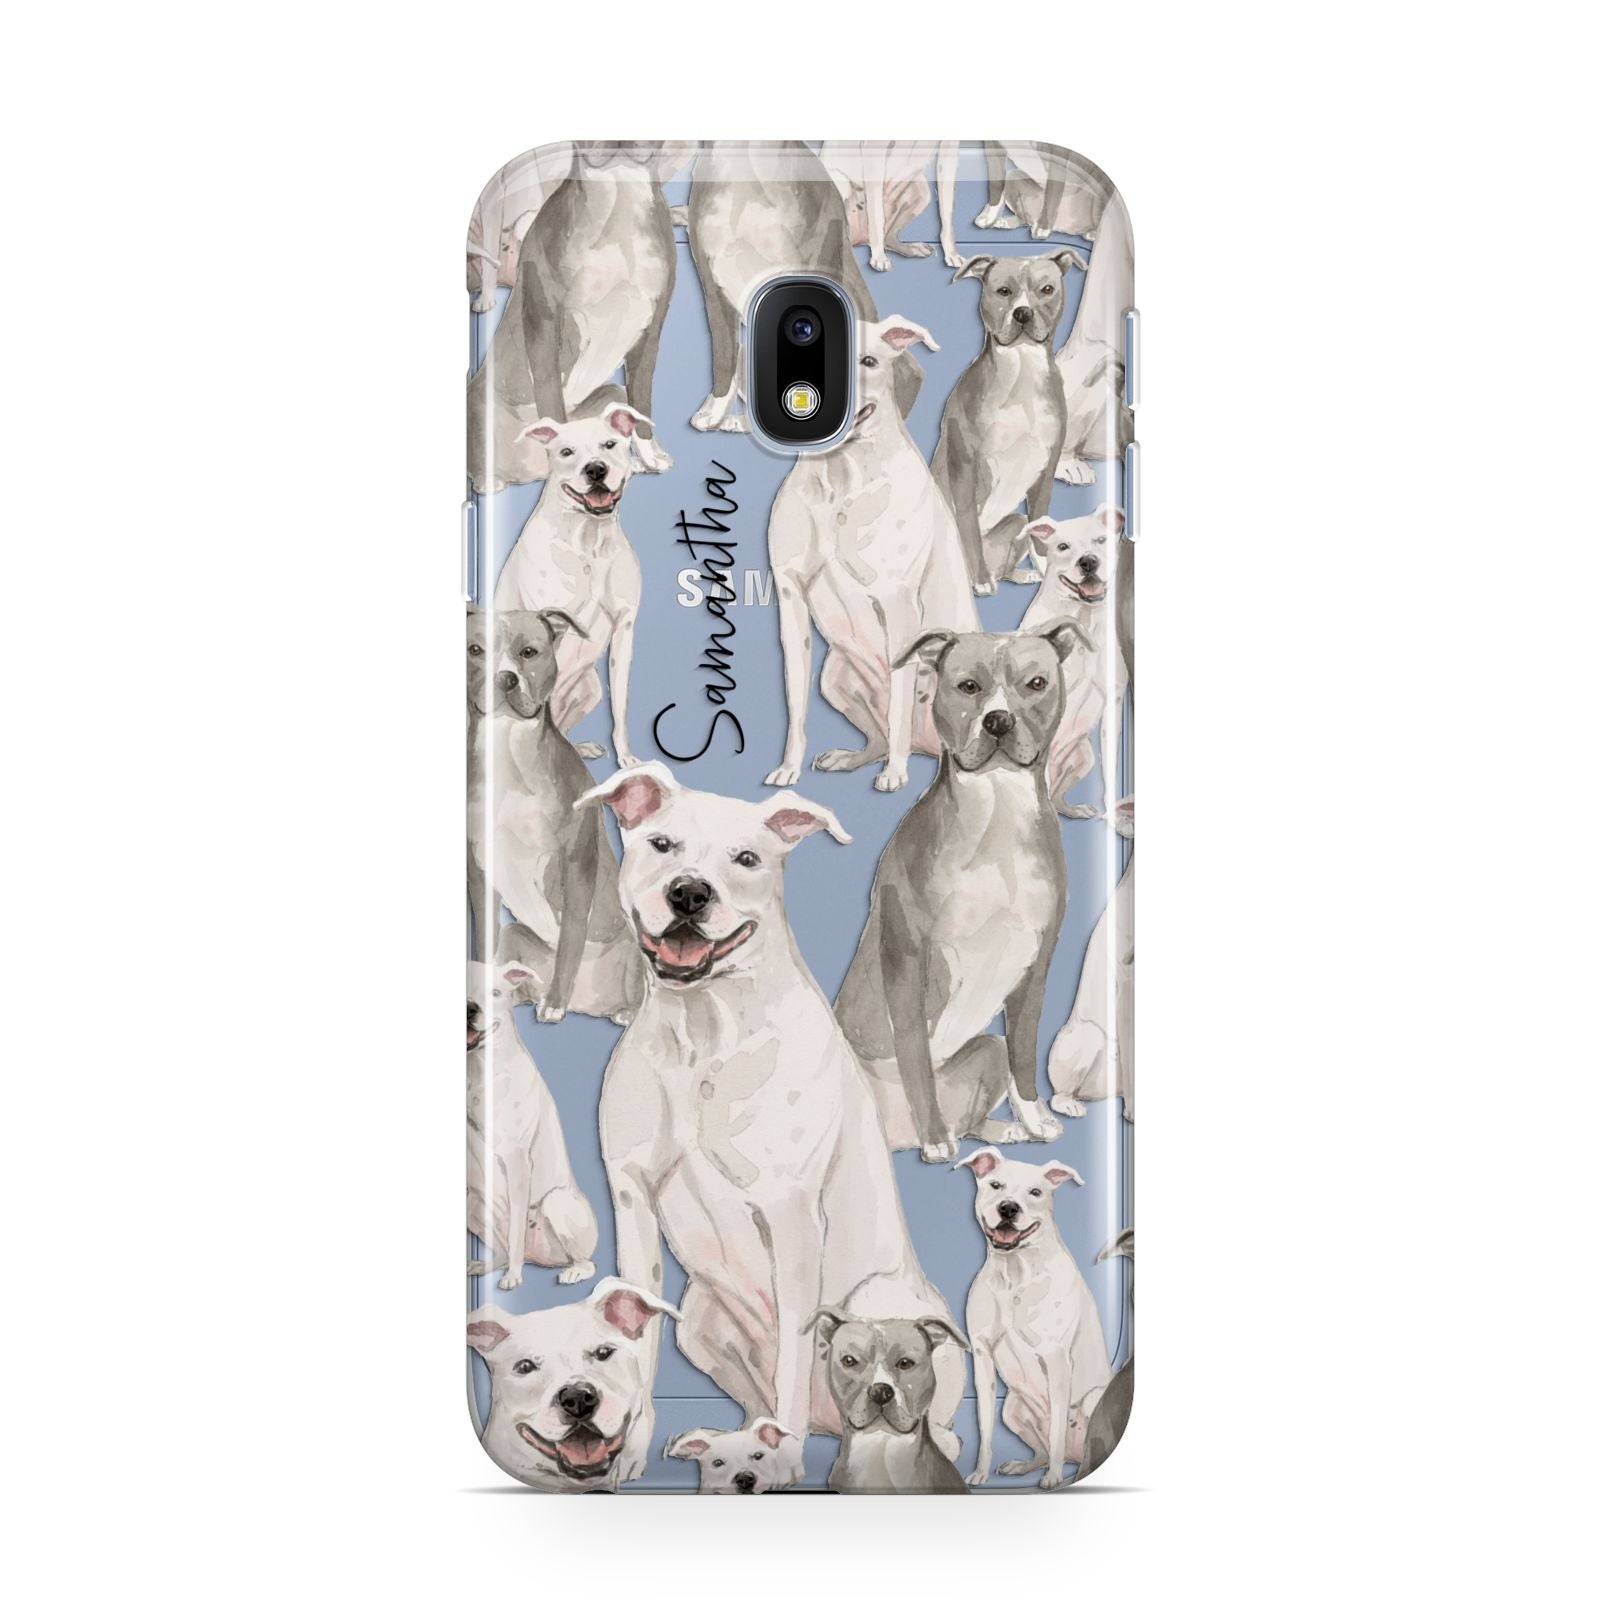 Personalised Staffordshire Dog Samsung Galaxy J3 2017 Case